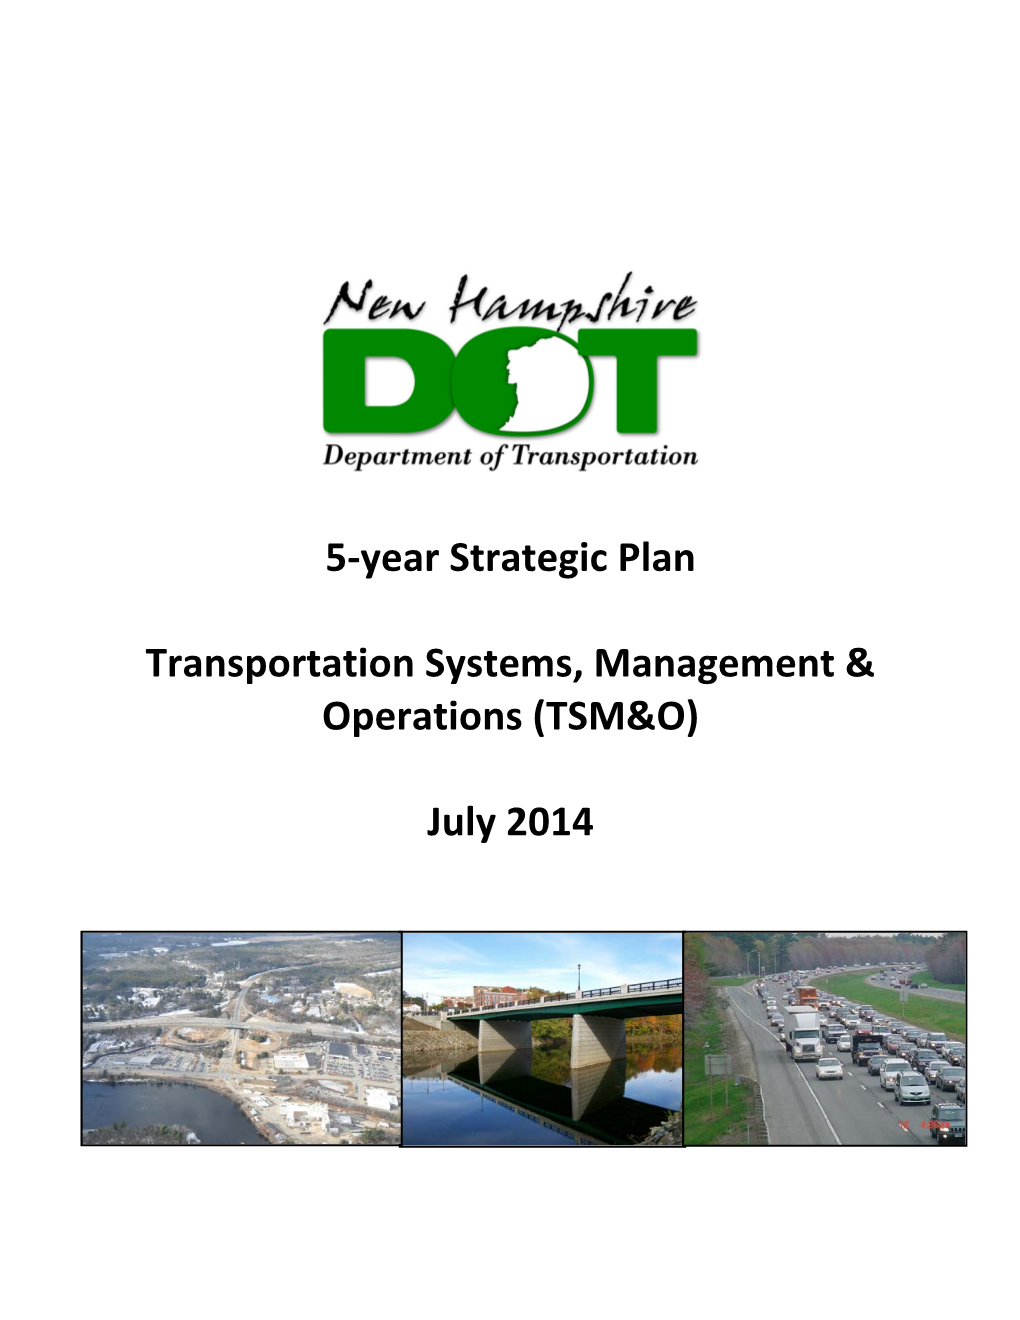 5-Year Strategic Plan Transportation Systems, Management & Operations